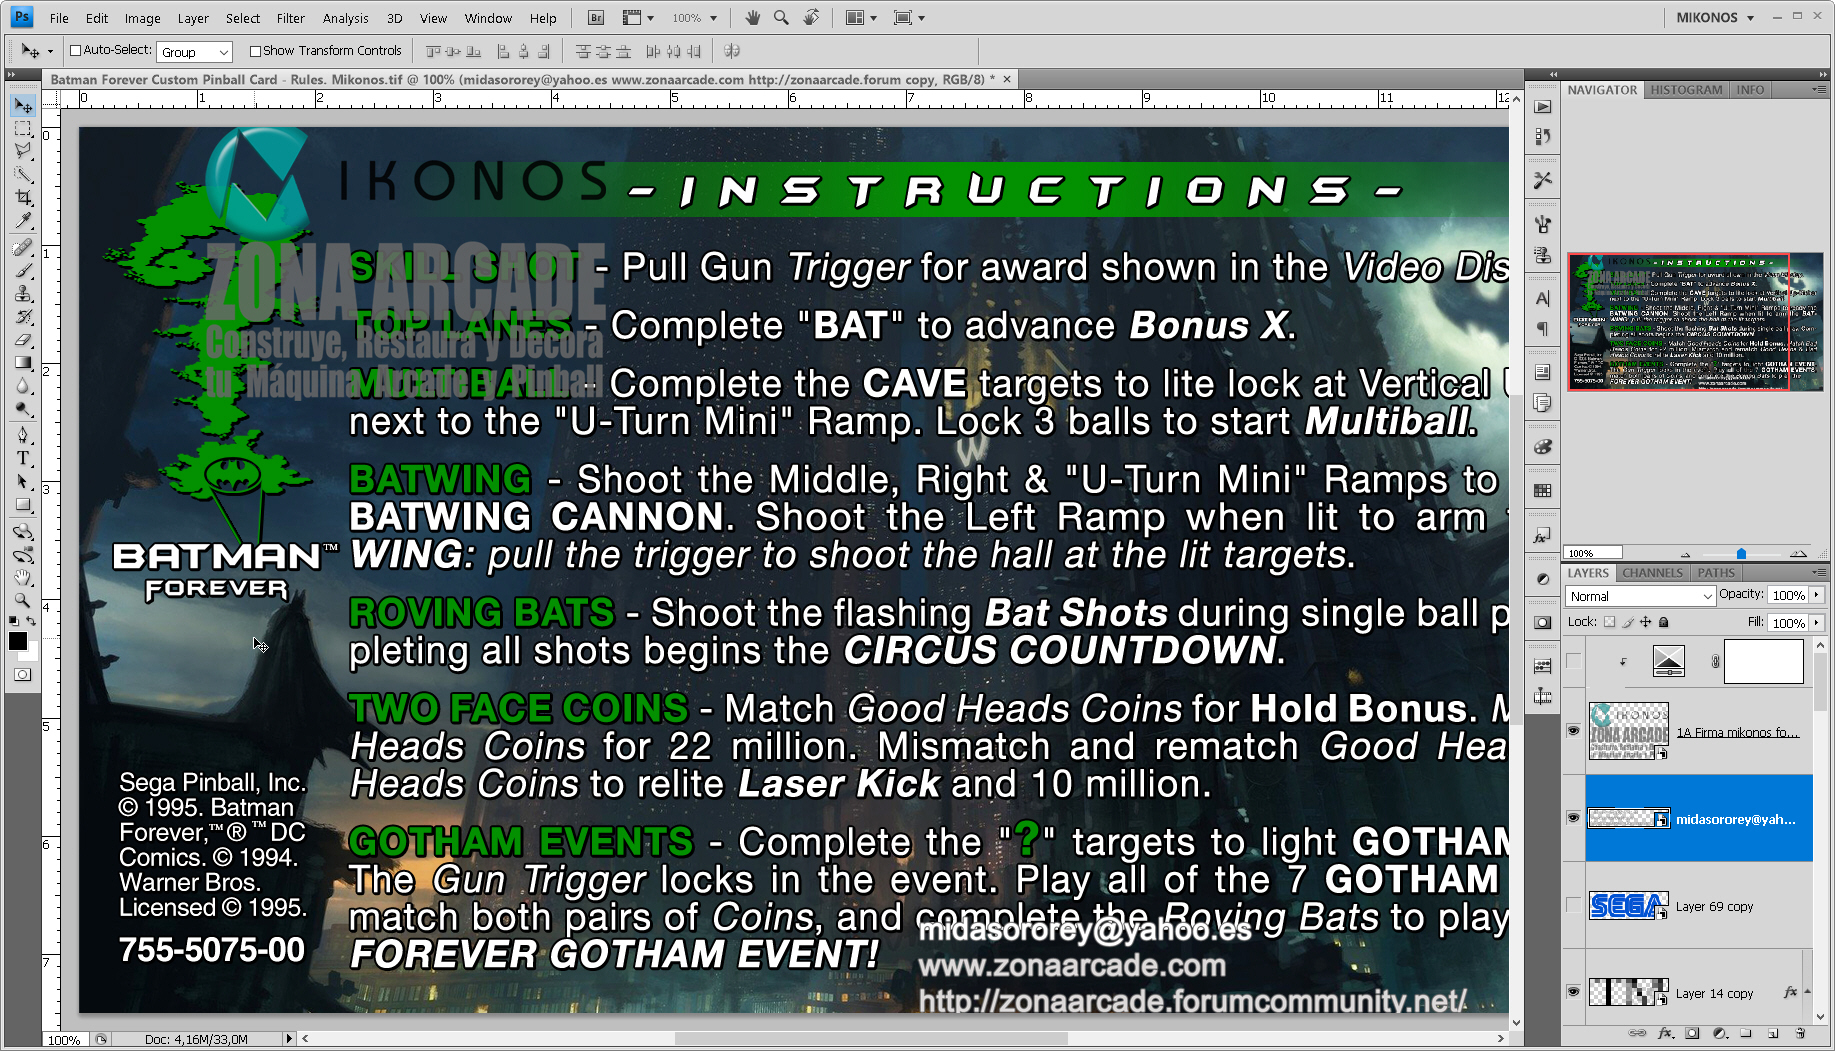 Batman Forever Custom Pinball Card - Rules. Mikonos2